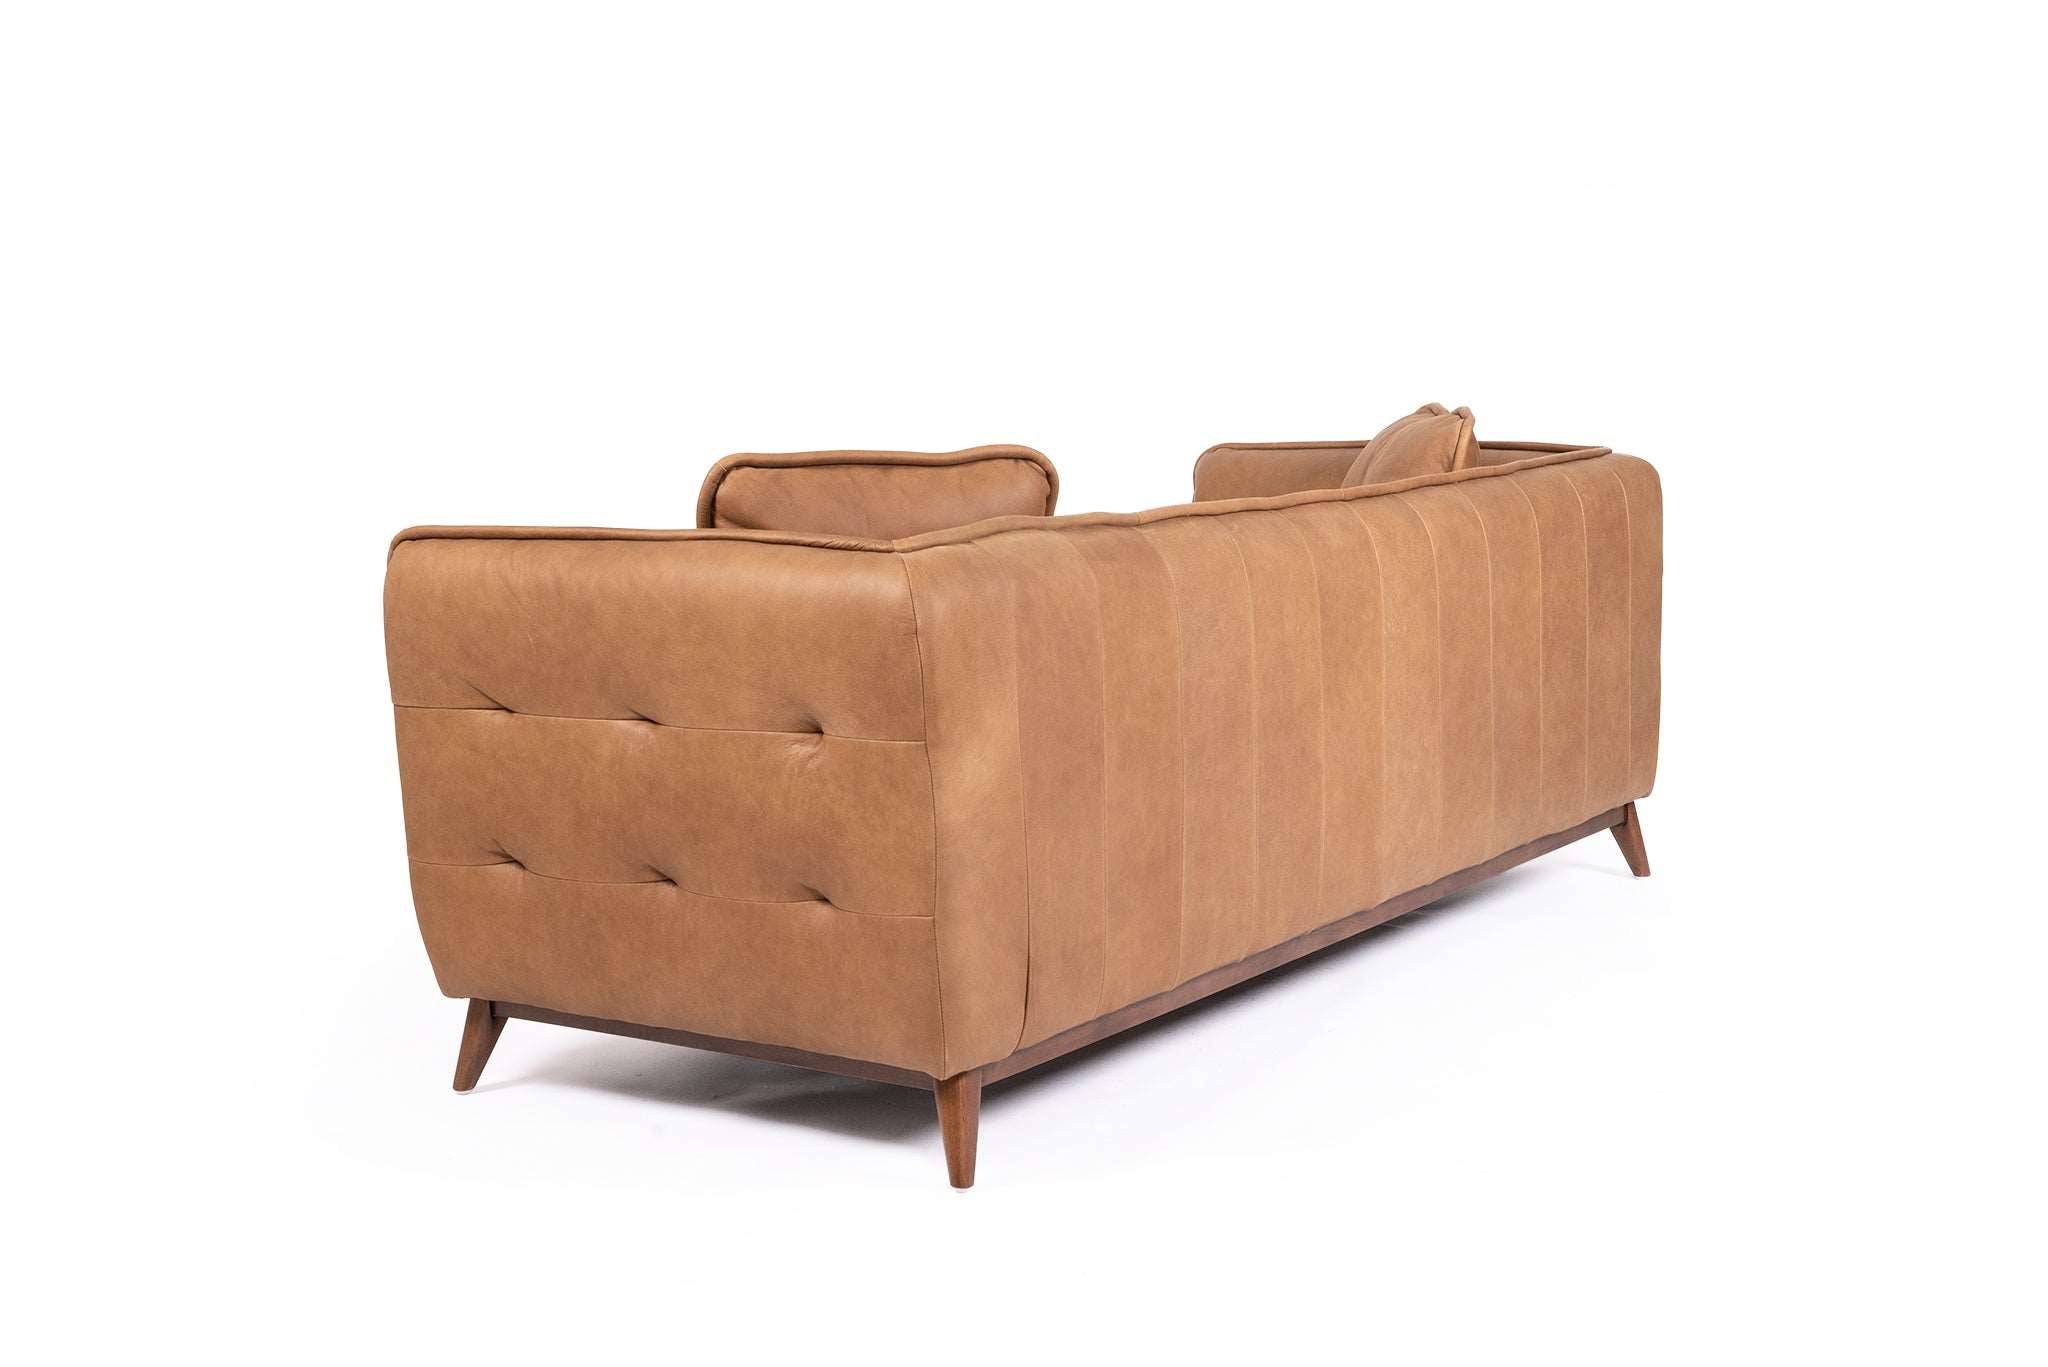 Brooklyn 3 Seater Mid Century Modern Leather Sofa